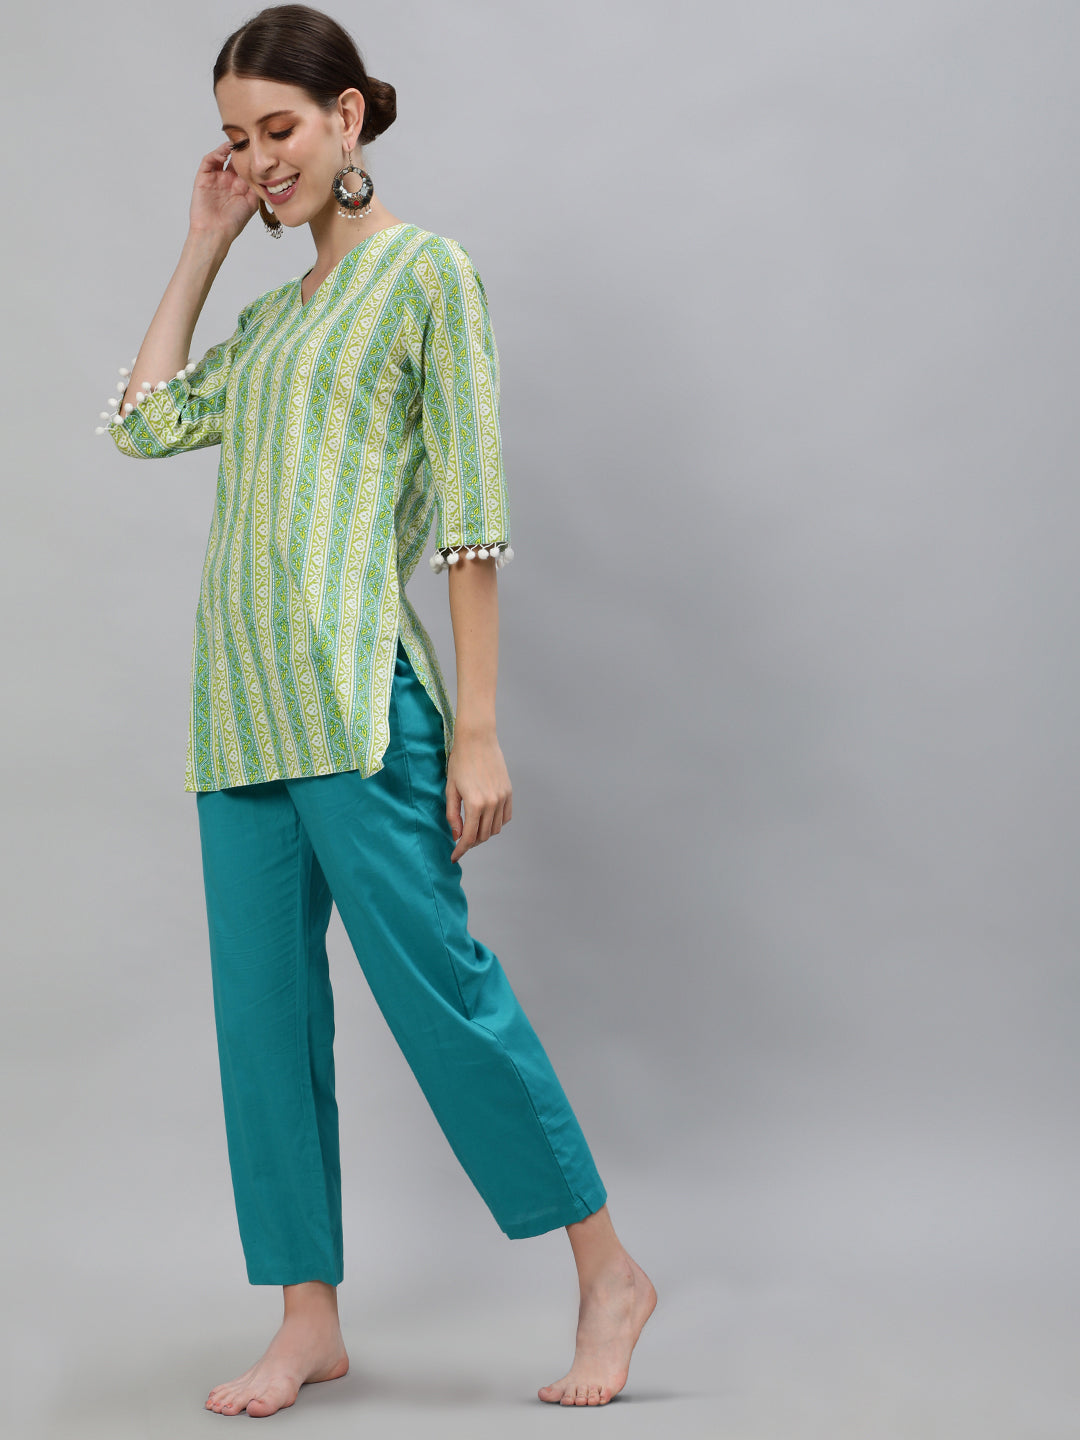 Green Colored Sleepwear Consists Of Short Kurta & Pajamas